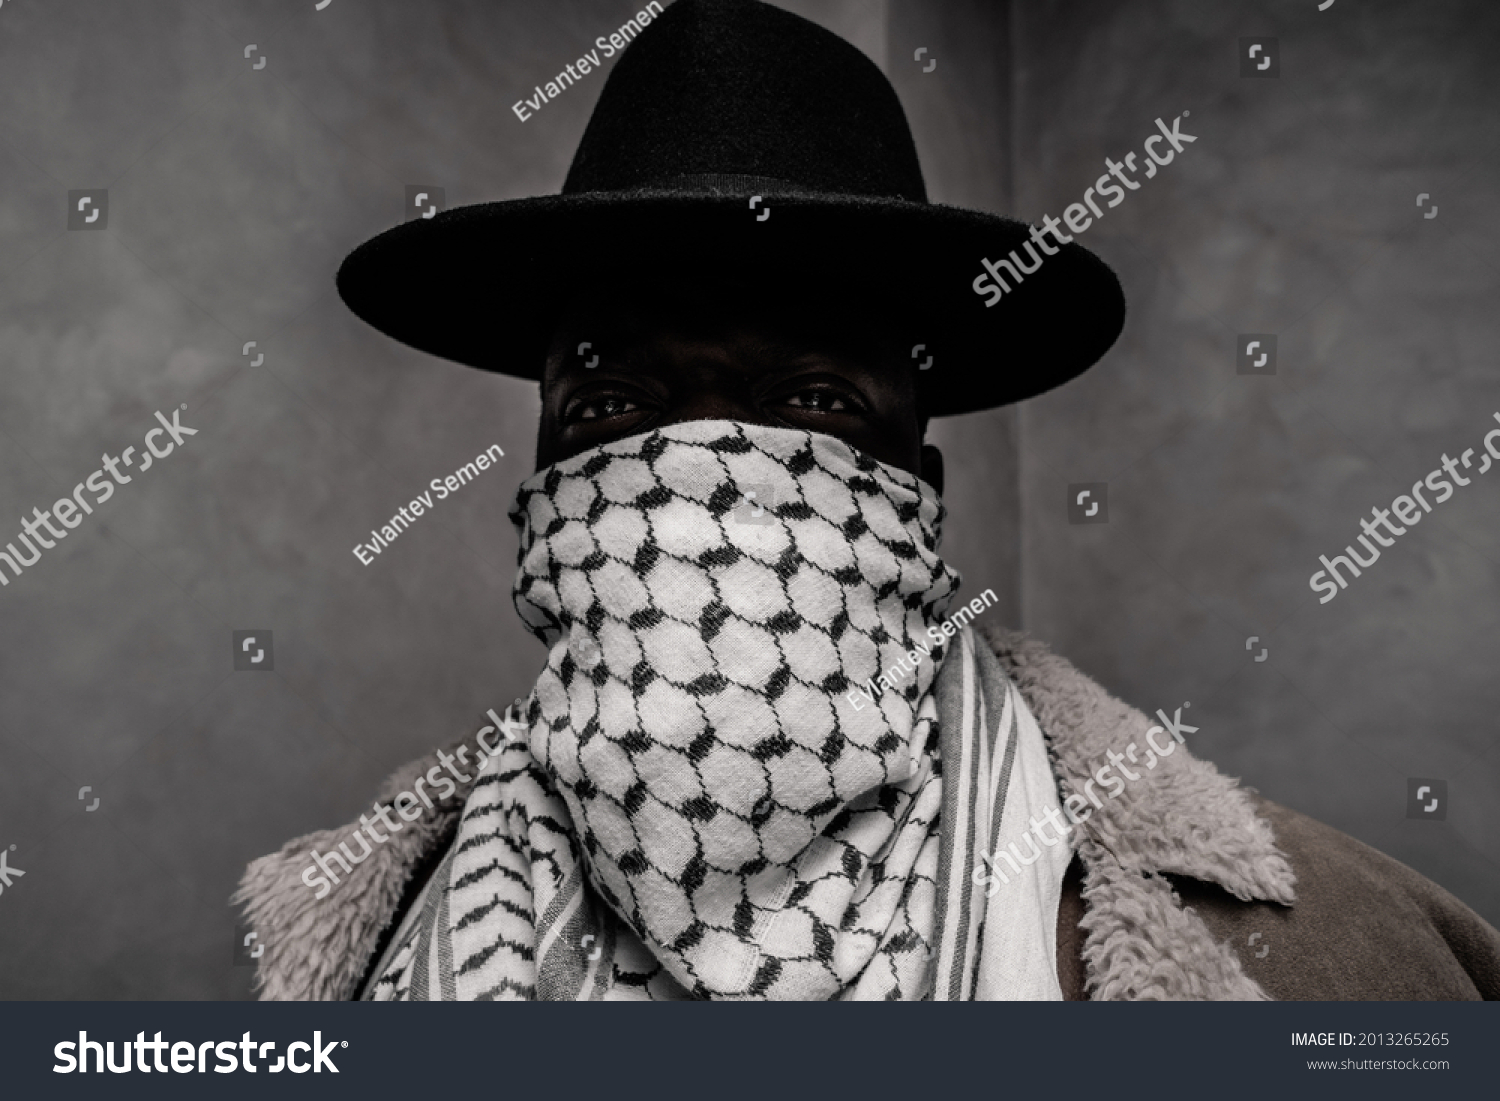 13,225 Robbers hat Images, Stock Photos & Vectors | Shutterstock